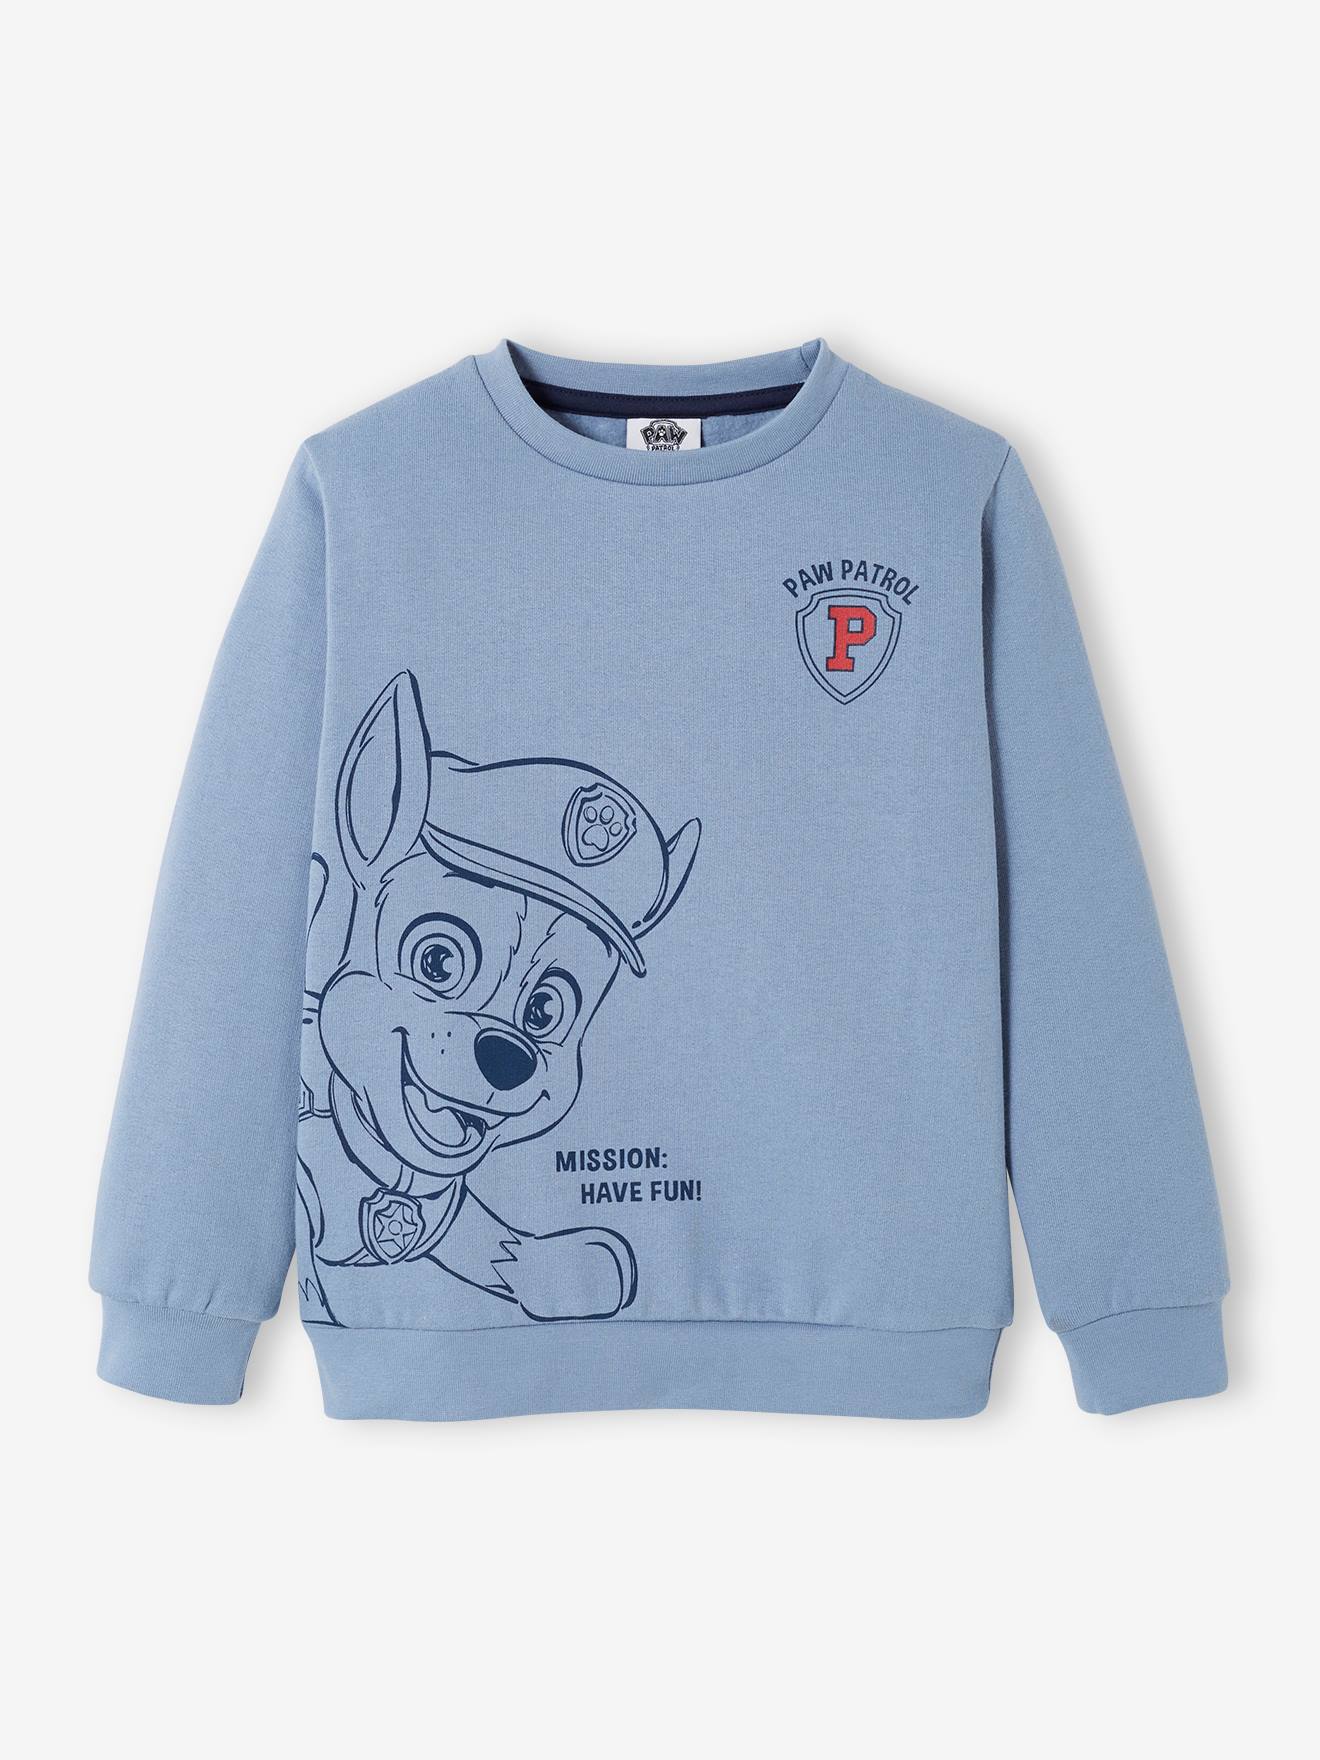 Paw Patrol® Sweatshirt for Boys - blue light solid with design, Boys